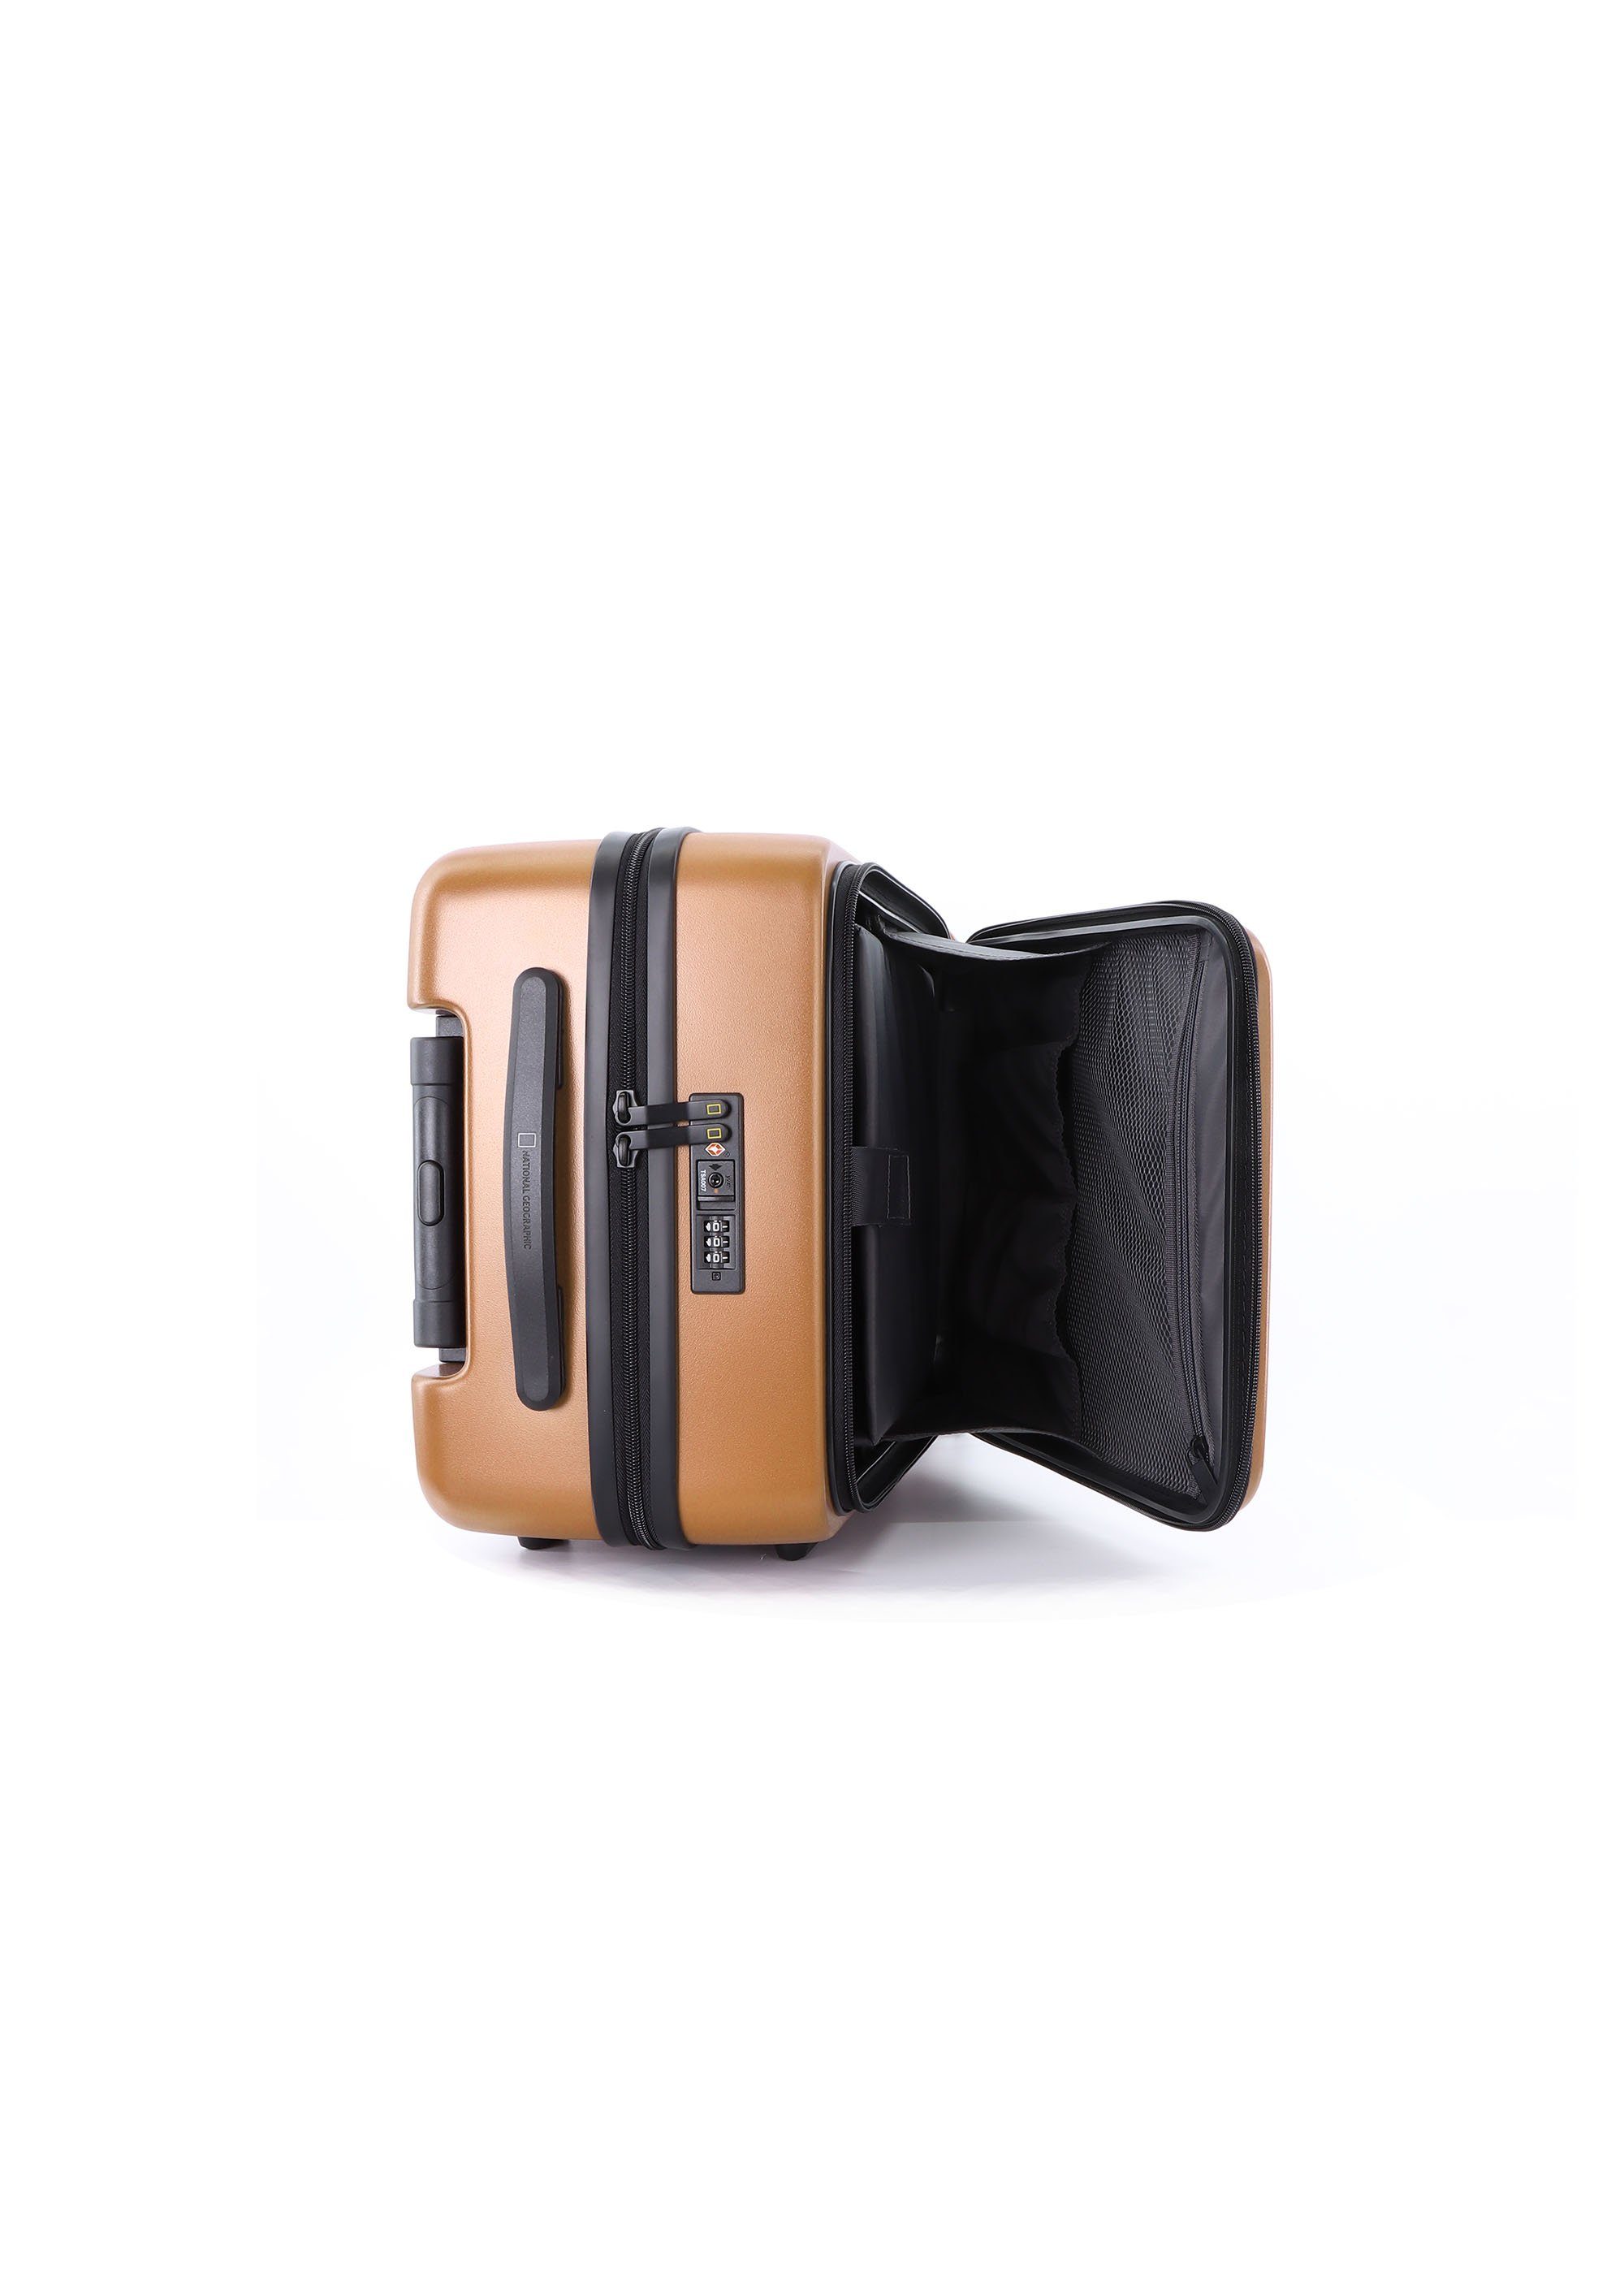 NATIONAL GEOGRAPHIC Koffer praktischem mit braun Lodge, TSA-Zahlenschloss